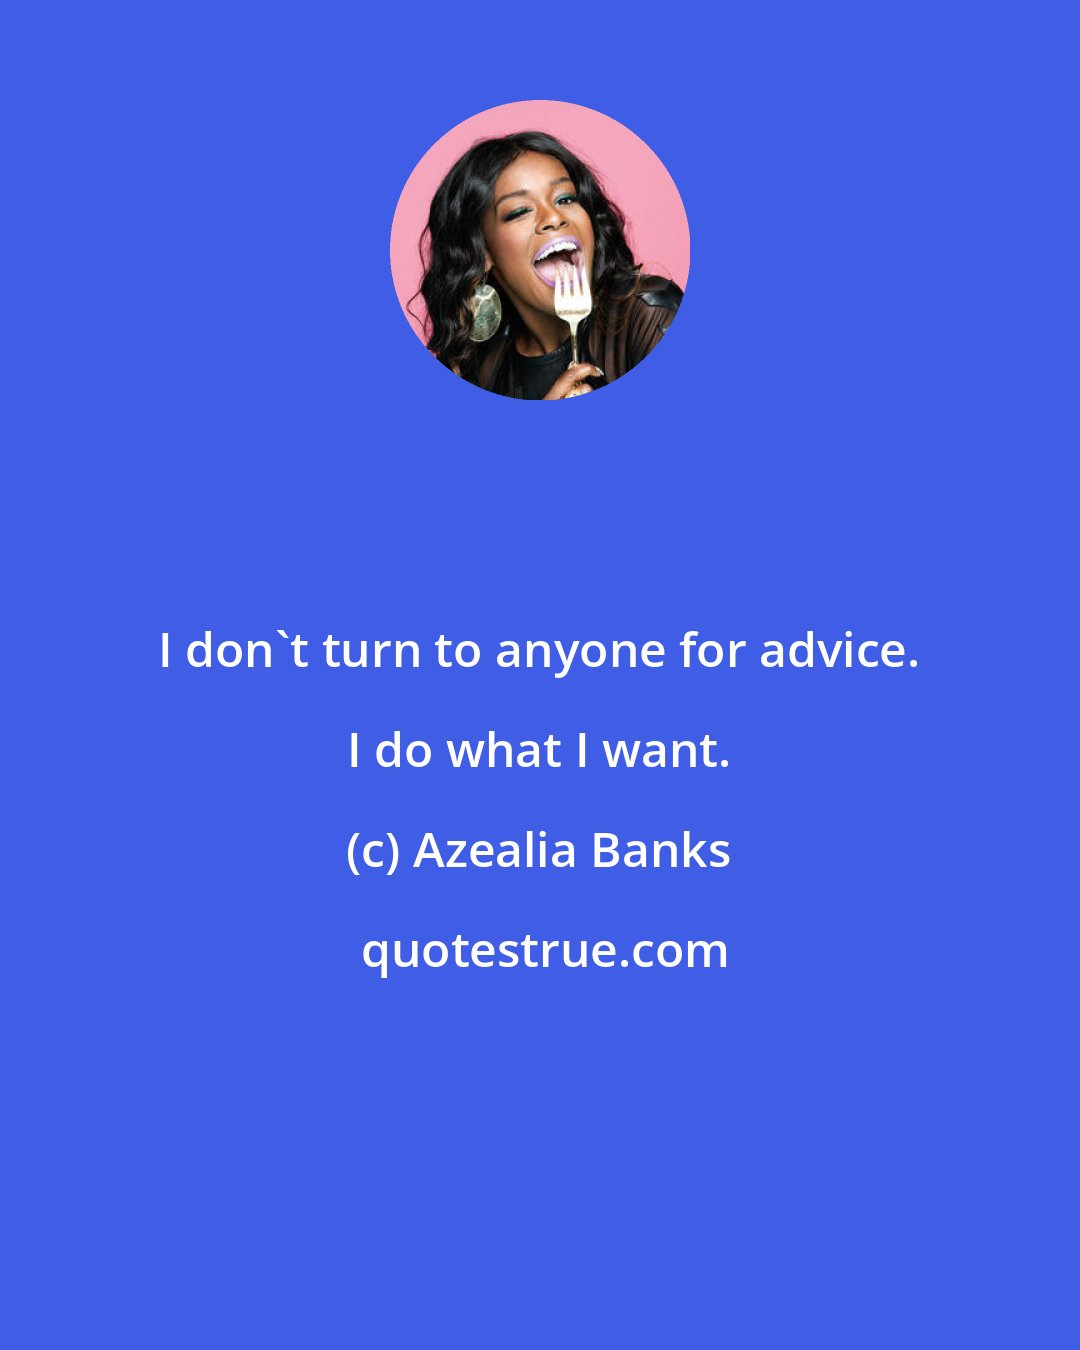 Azealia Banks: I don't turn to anyone for advice. I do what I want.